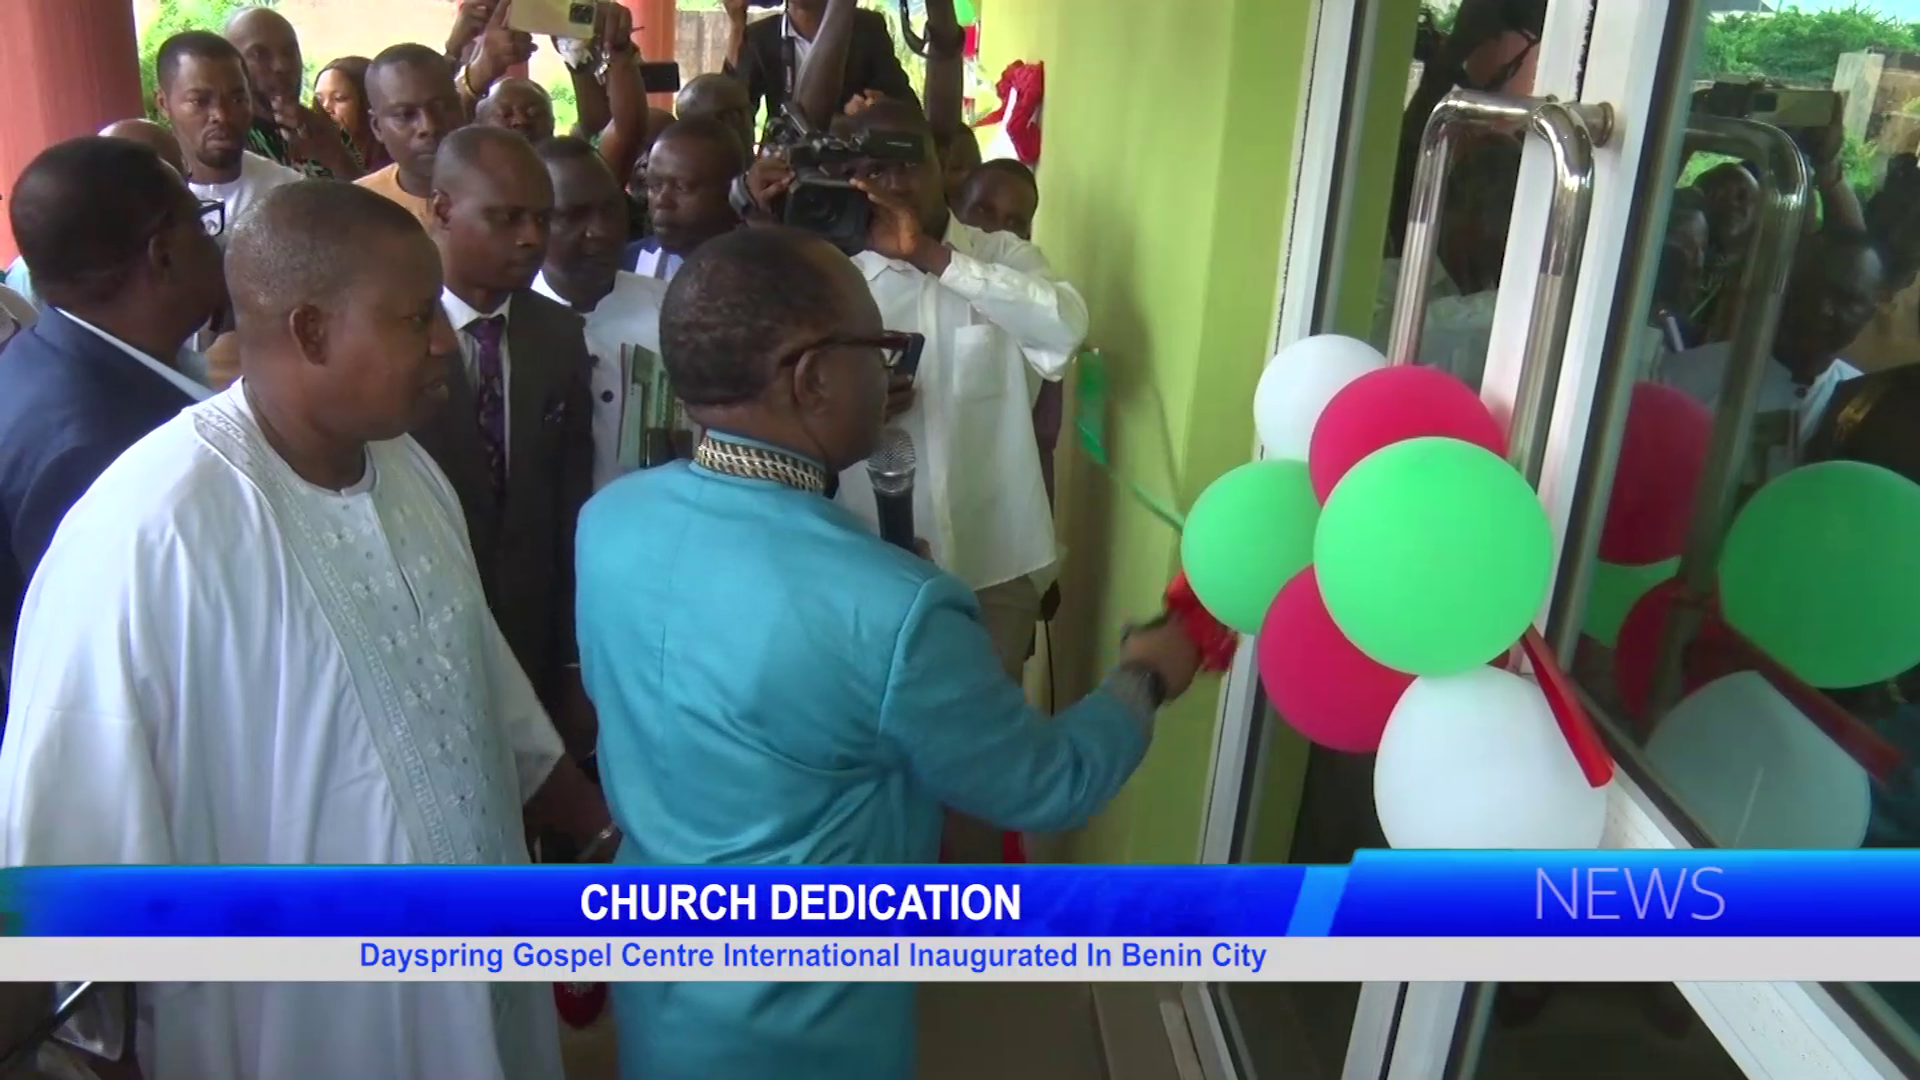 Dayspring Gospel Centre International Inaugurated In Benin City